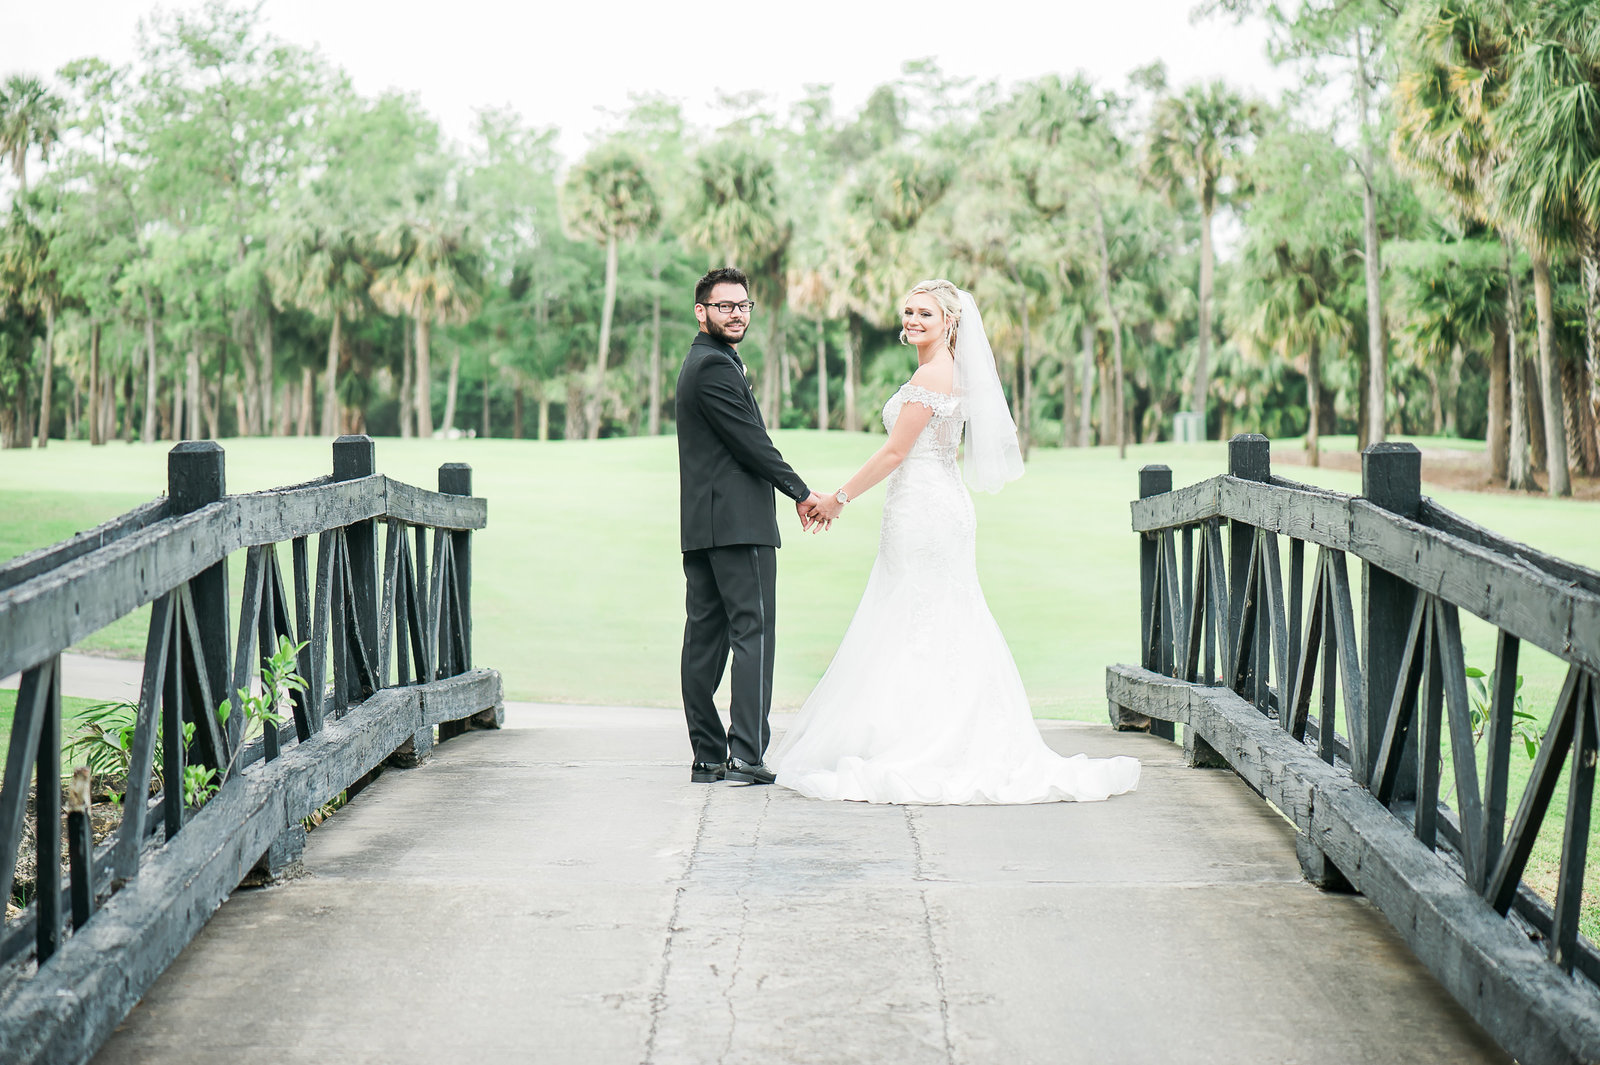 Old Bridge Wedding - Myacoo Country Club Wedding - Palm Beach Wedding Photography by Palm Beach Photography, Inc.